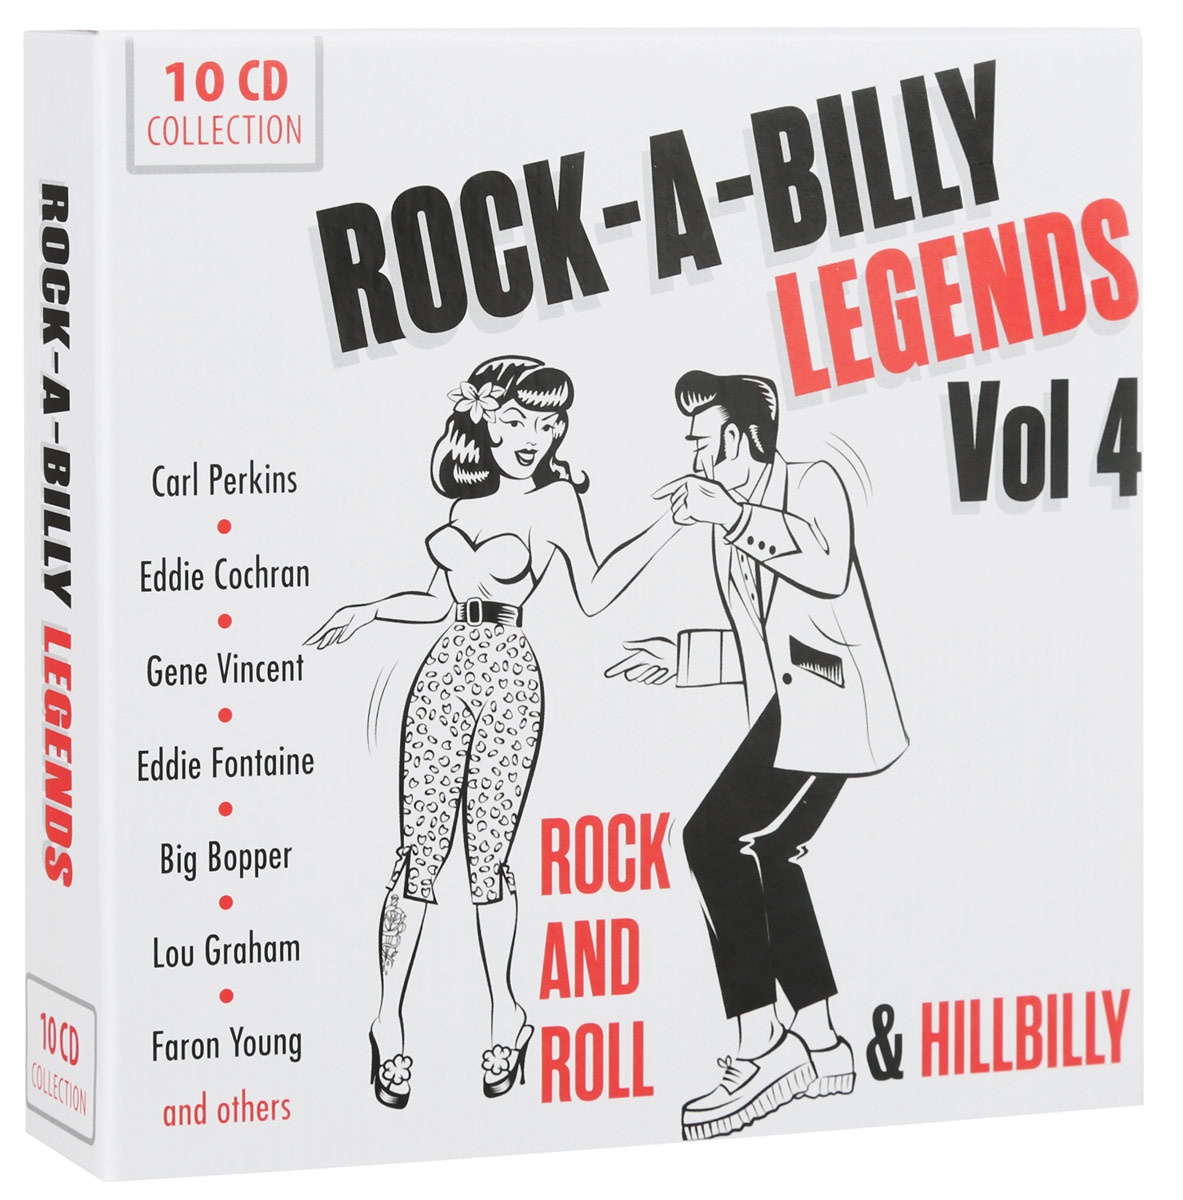 Rock-A-Billy Legends. Vol. 4. Rock And Roll & Hillbilly (10 CD)